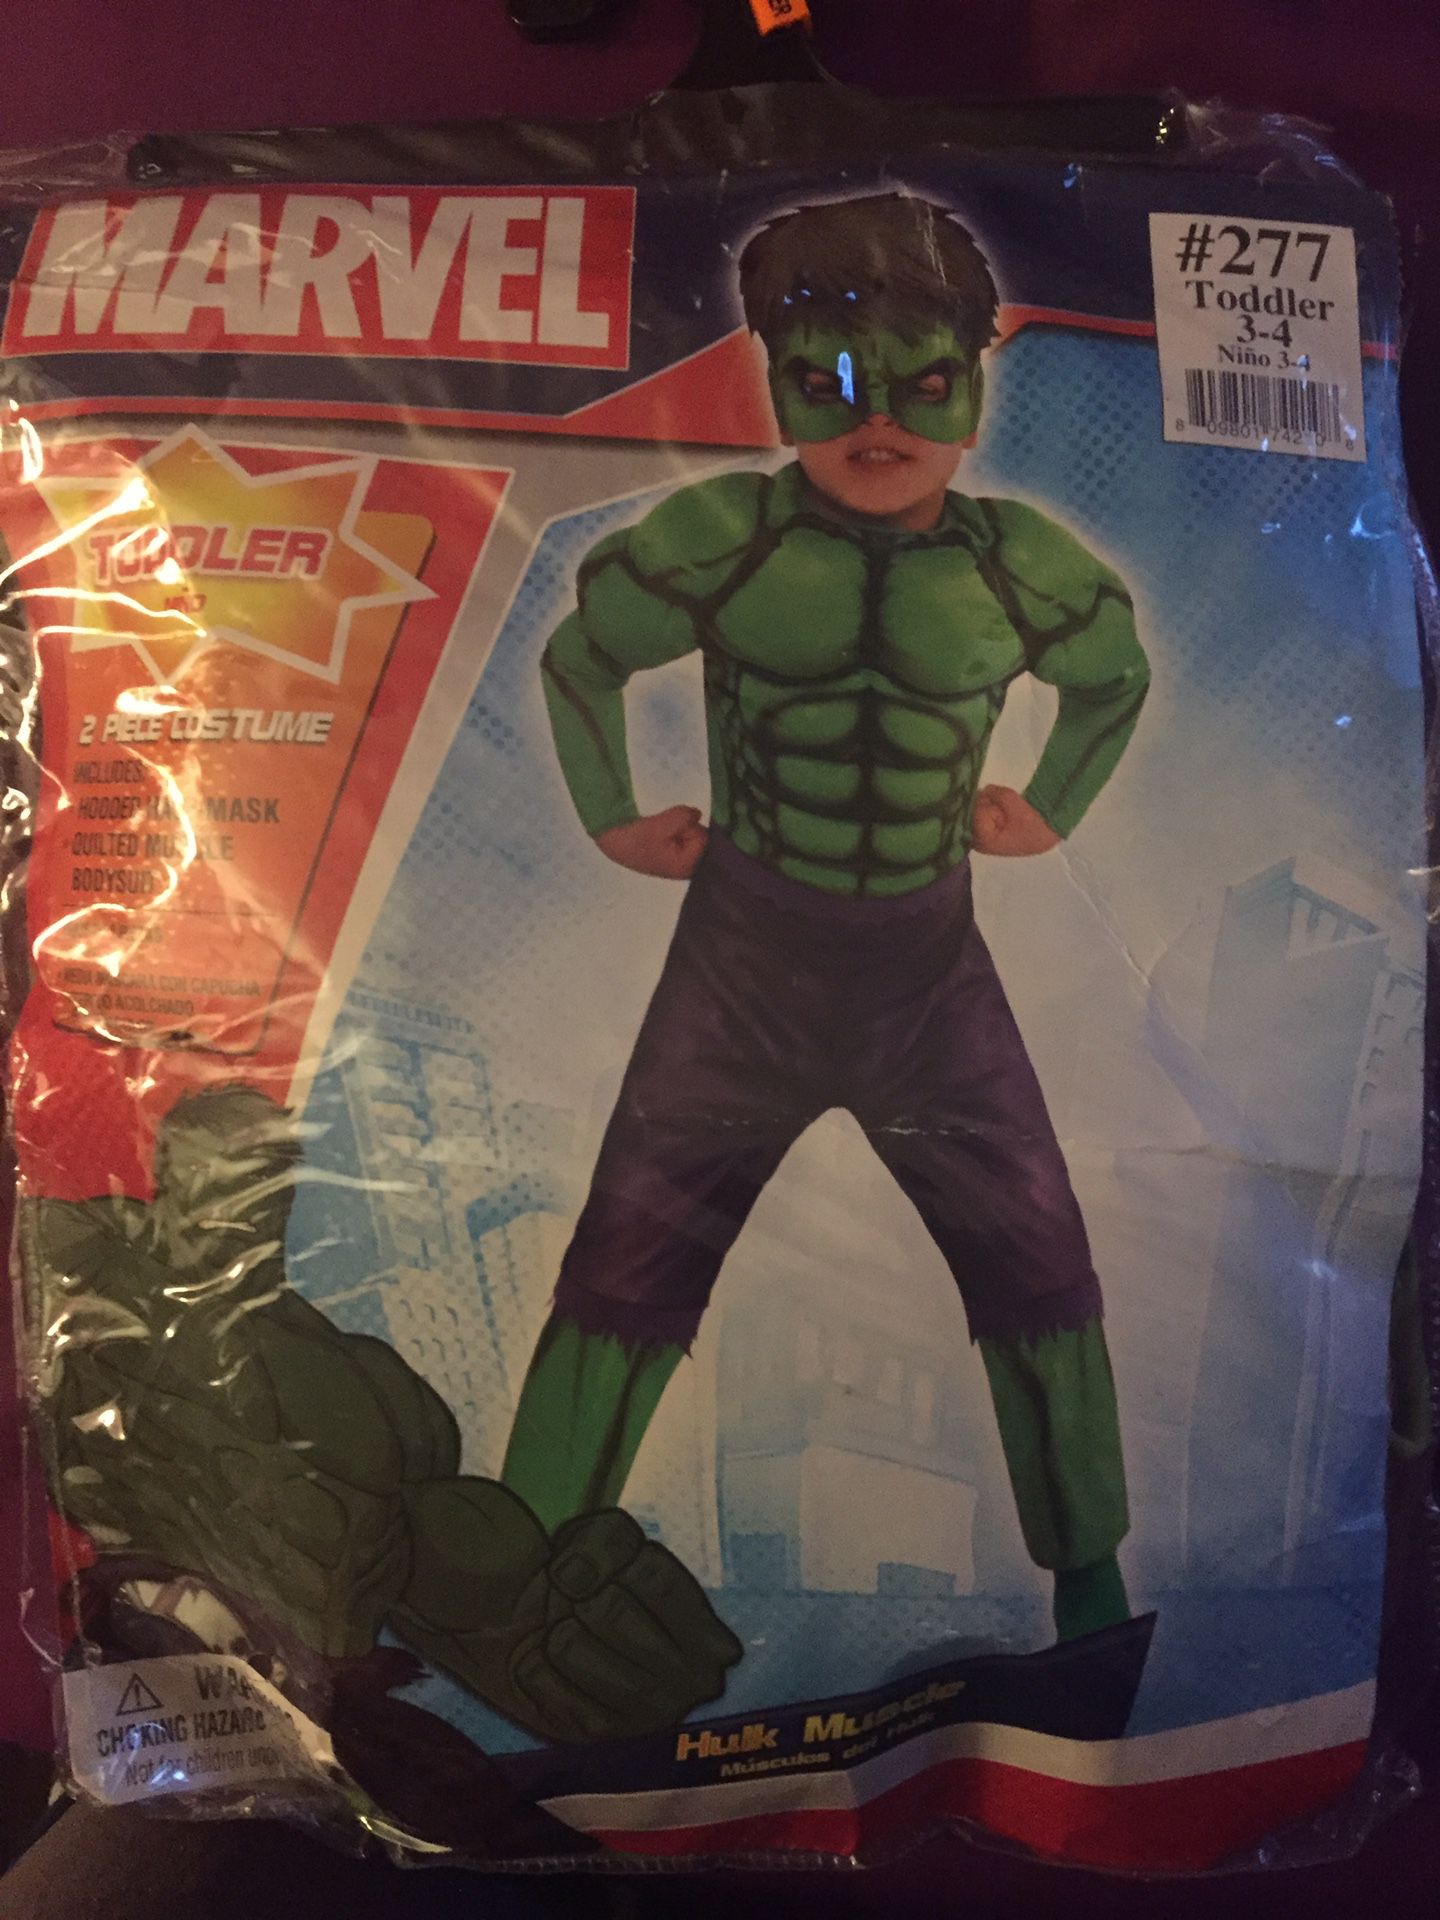 Incredible Hulk costume